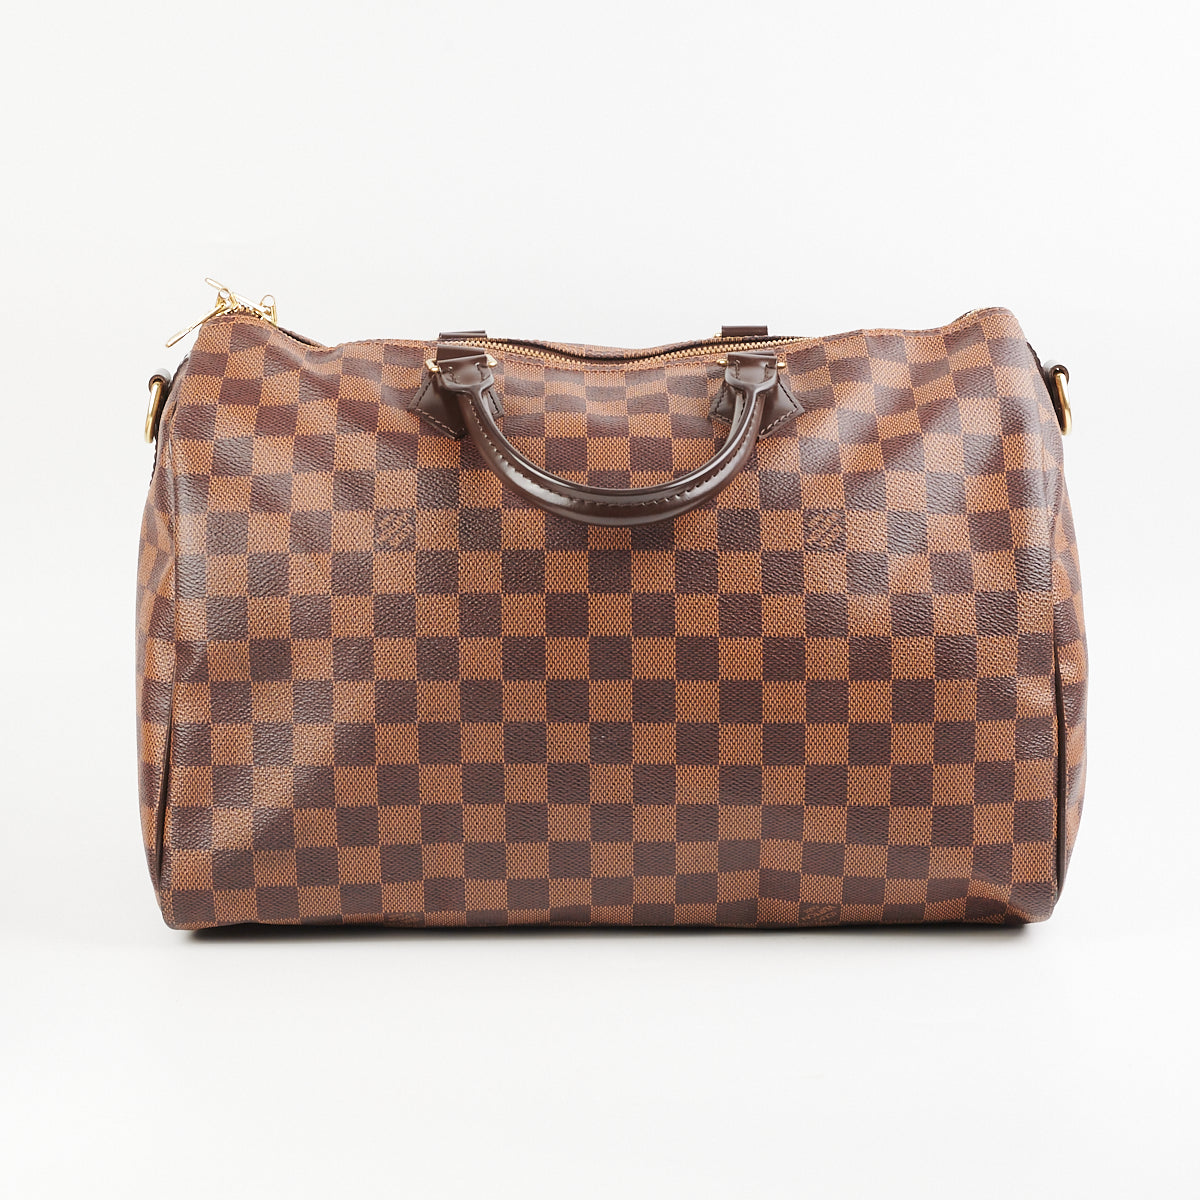 Louis Vuitton, Bags, Speedy 35 Banduoulier Damier Ebene Bag Sp43